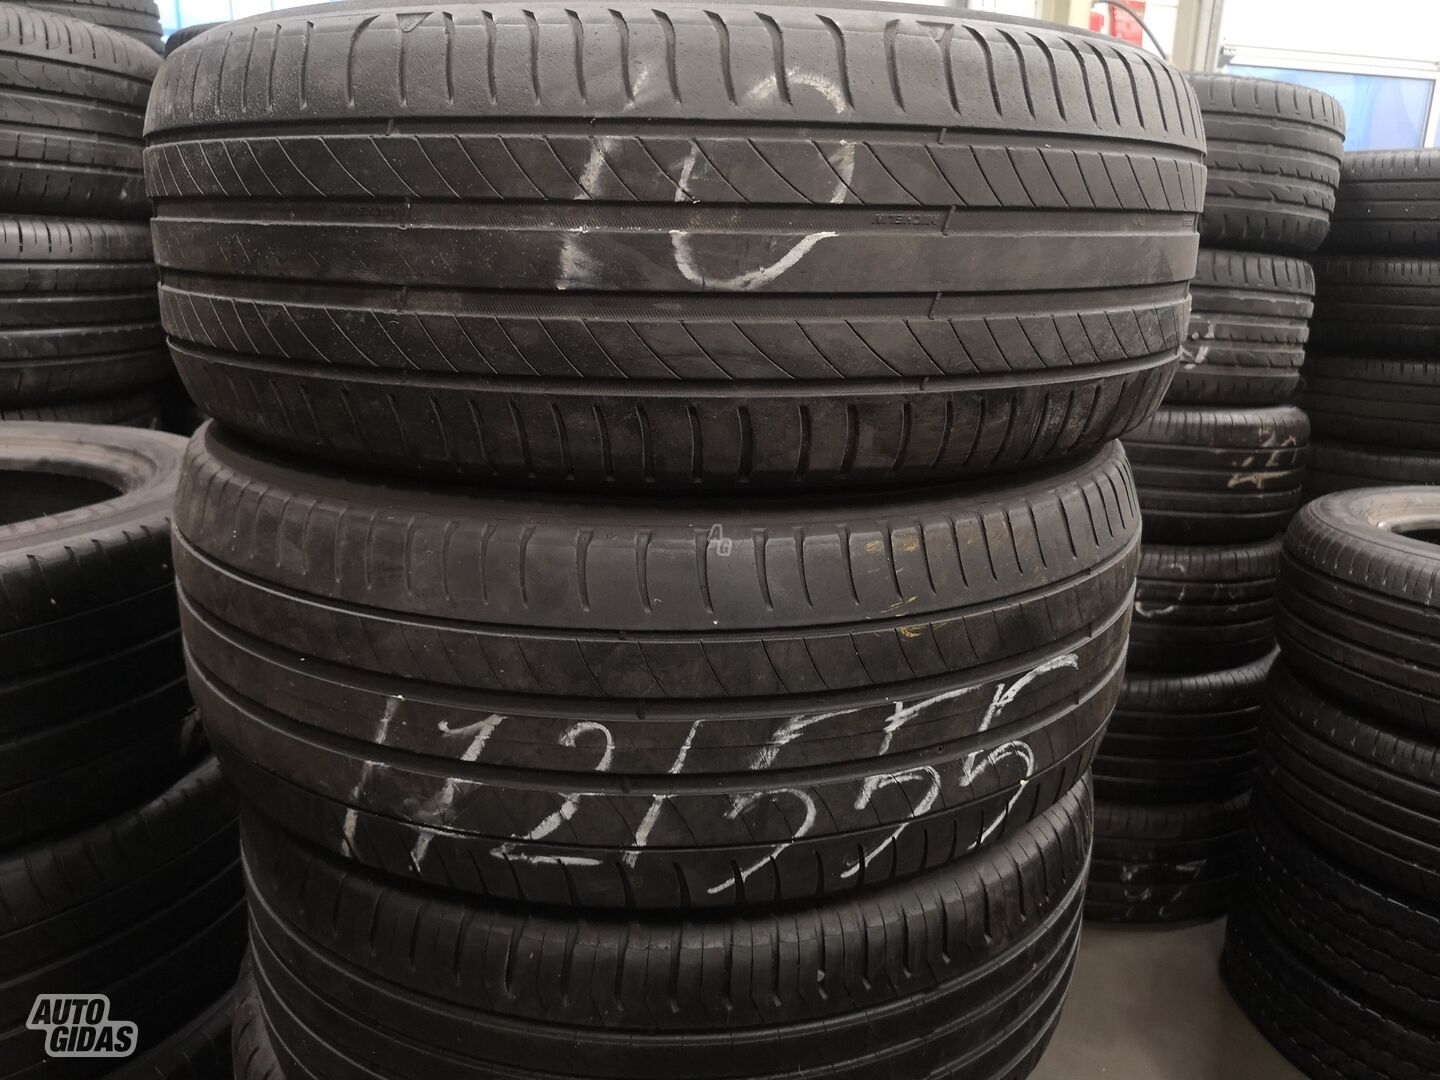 R17 summer tyres passanger car